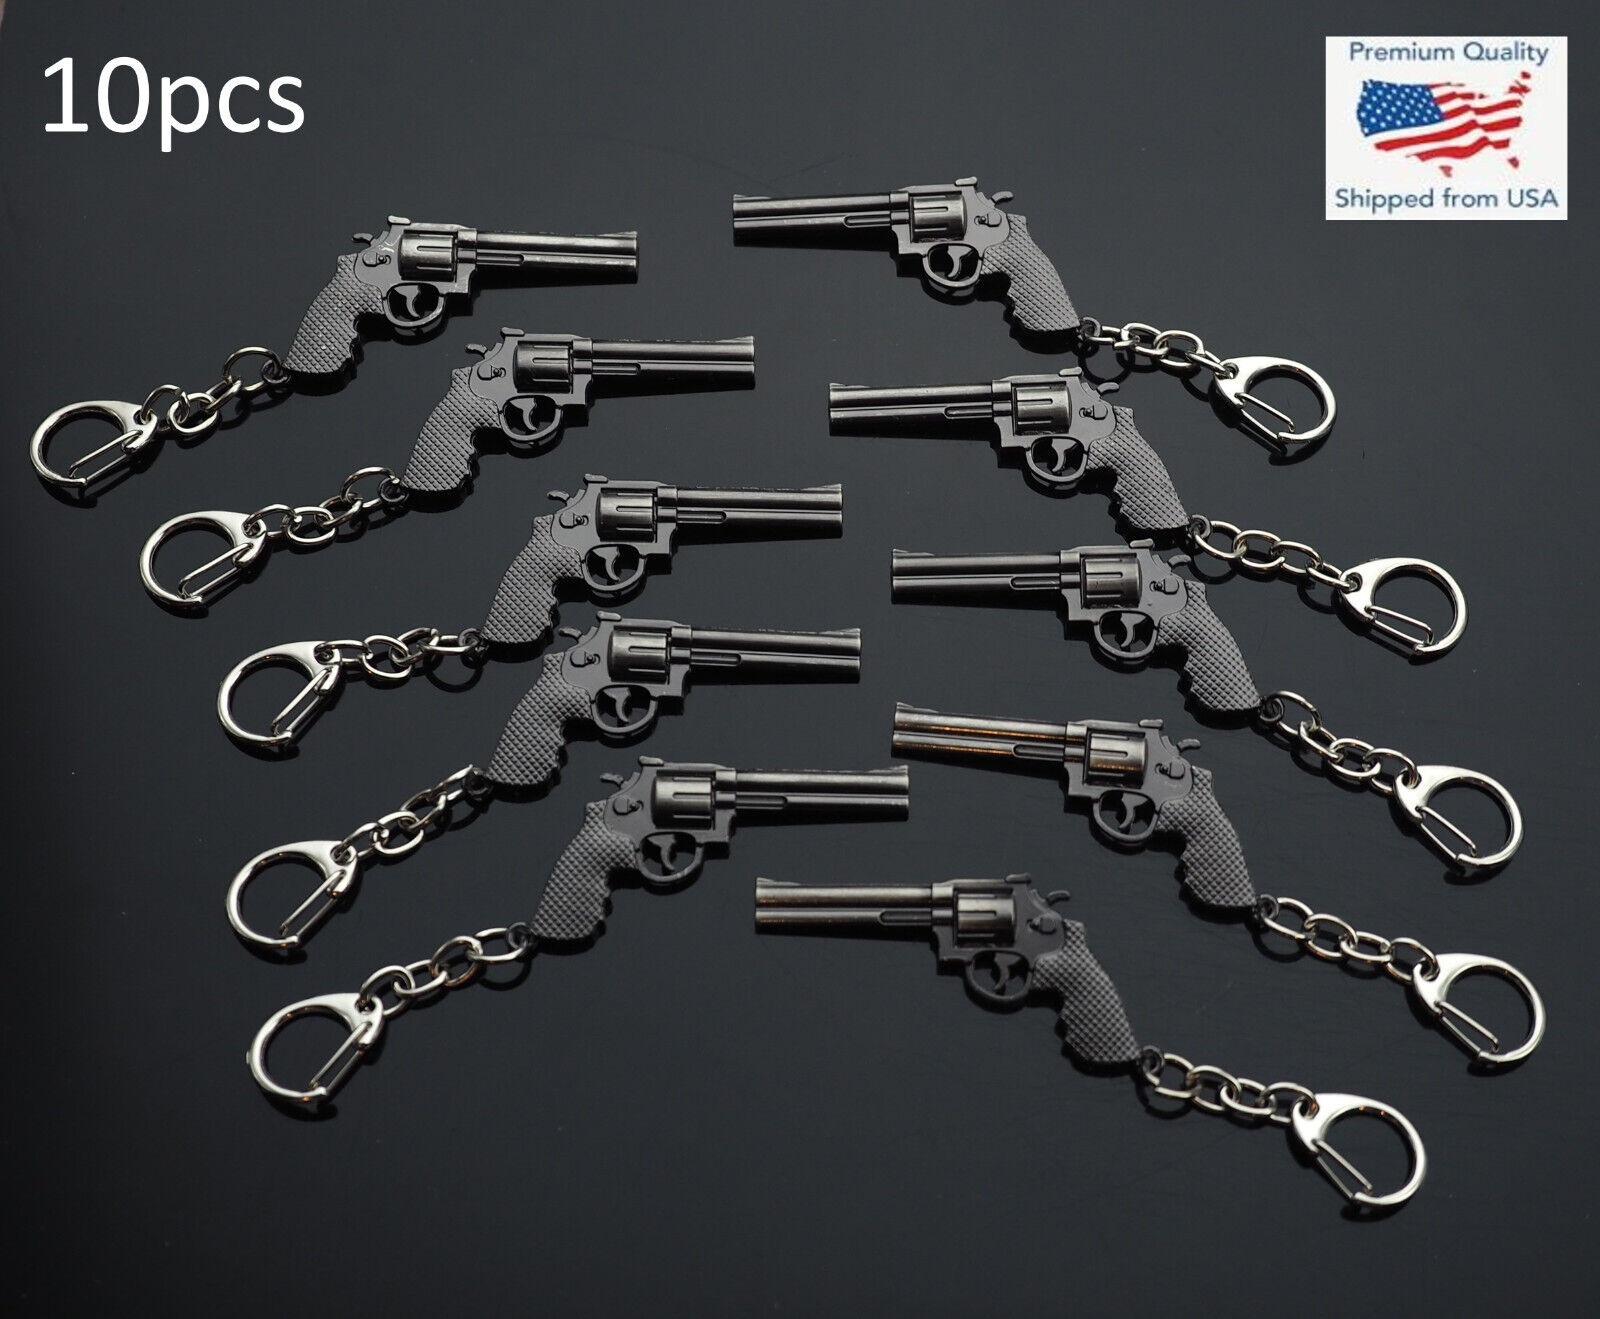 10 PCS Pack Lot - 357 Revolver Pistol Weapon Gun Keyring Keychain Key Ring Chain